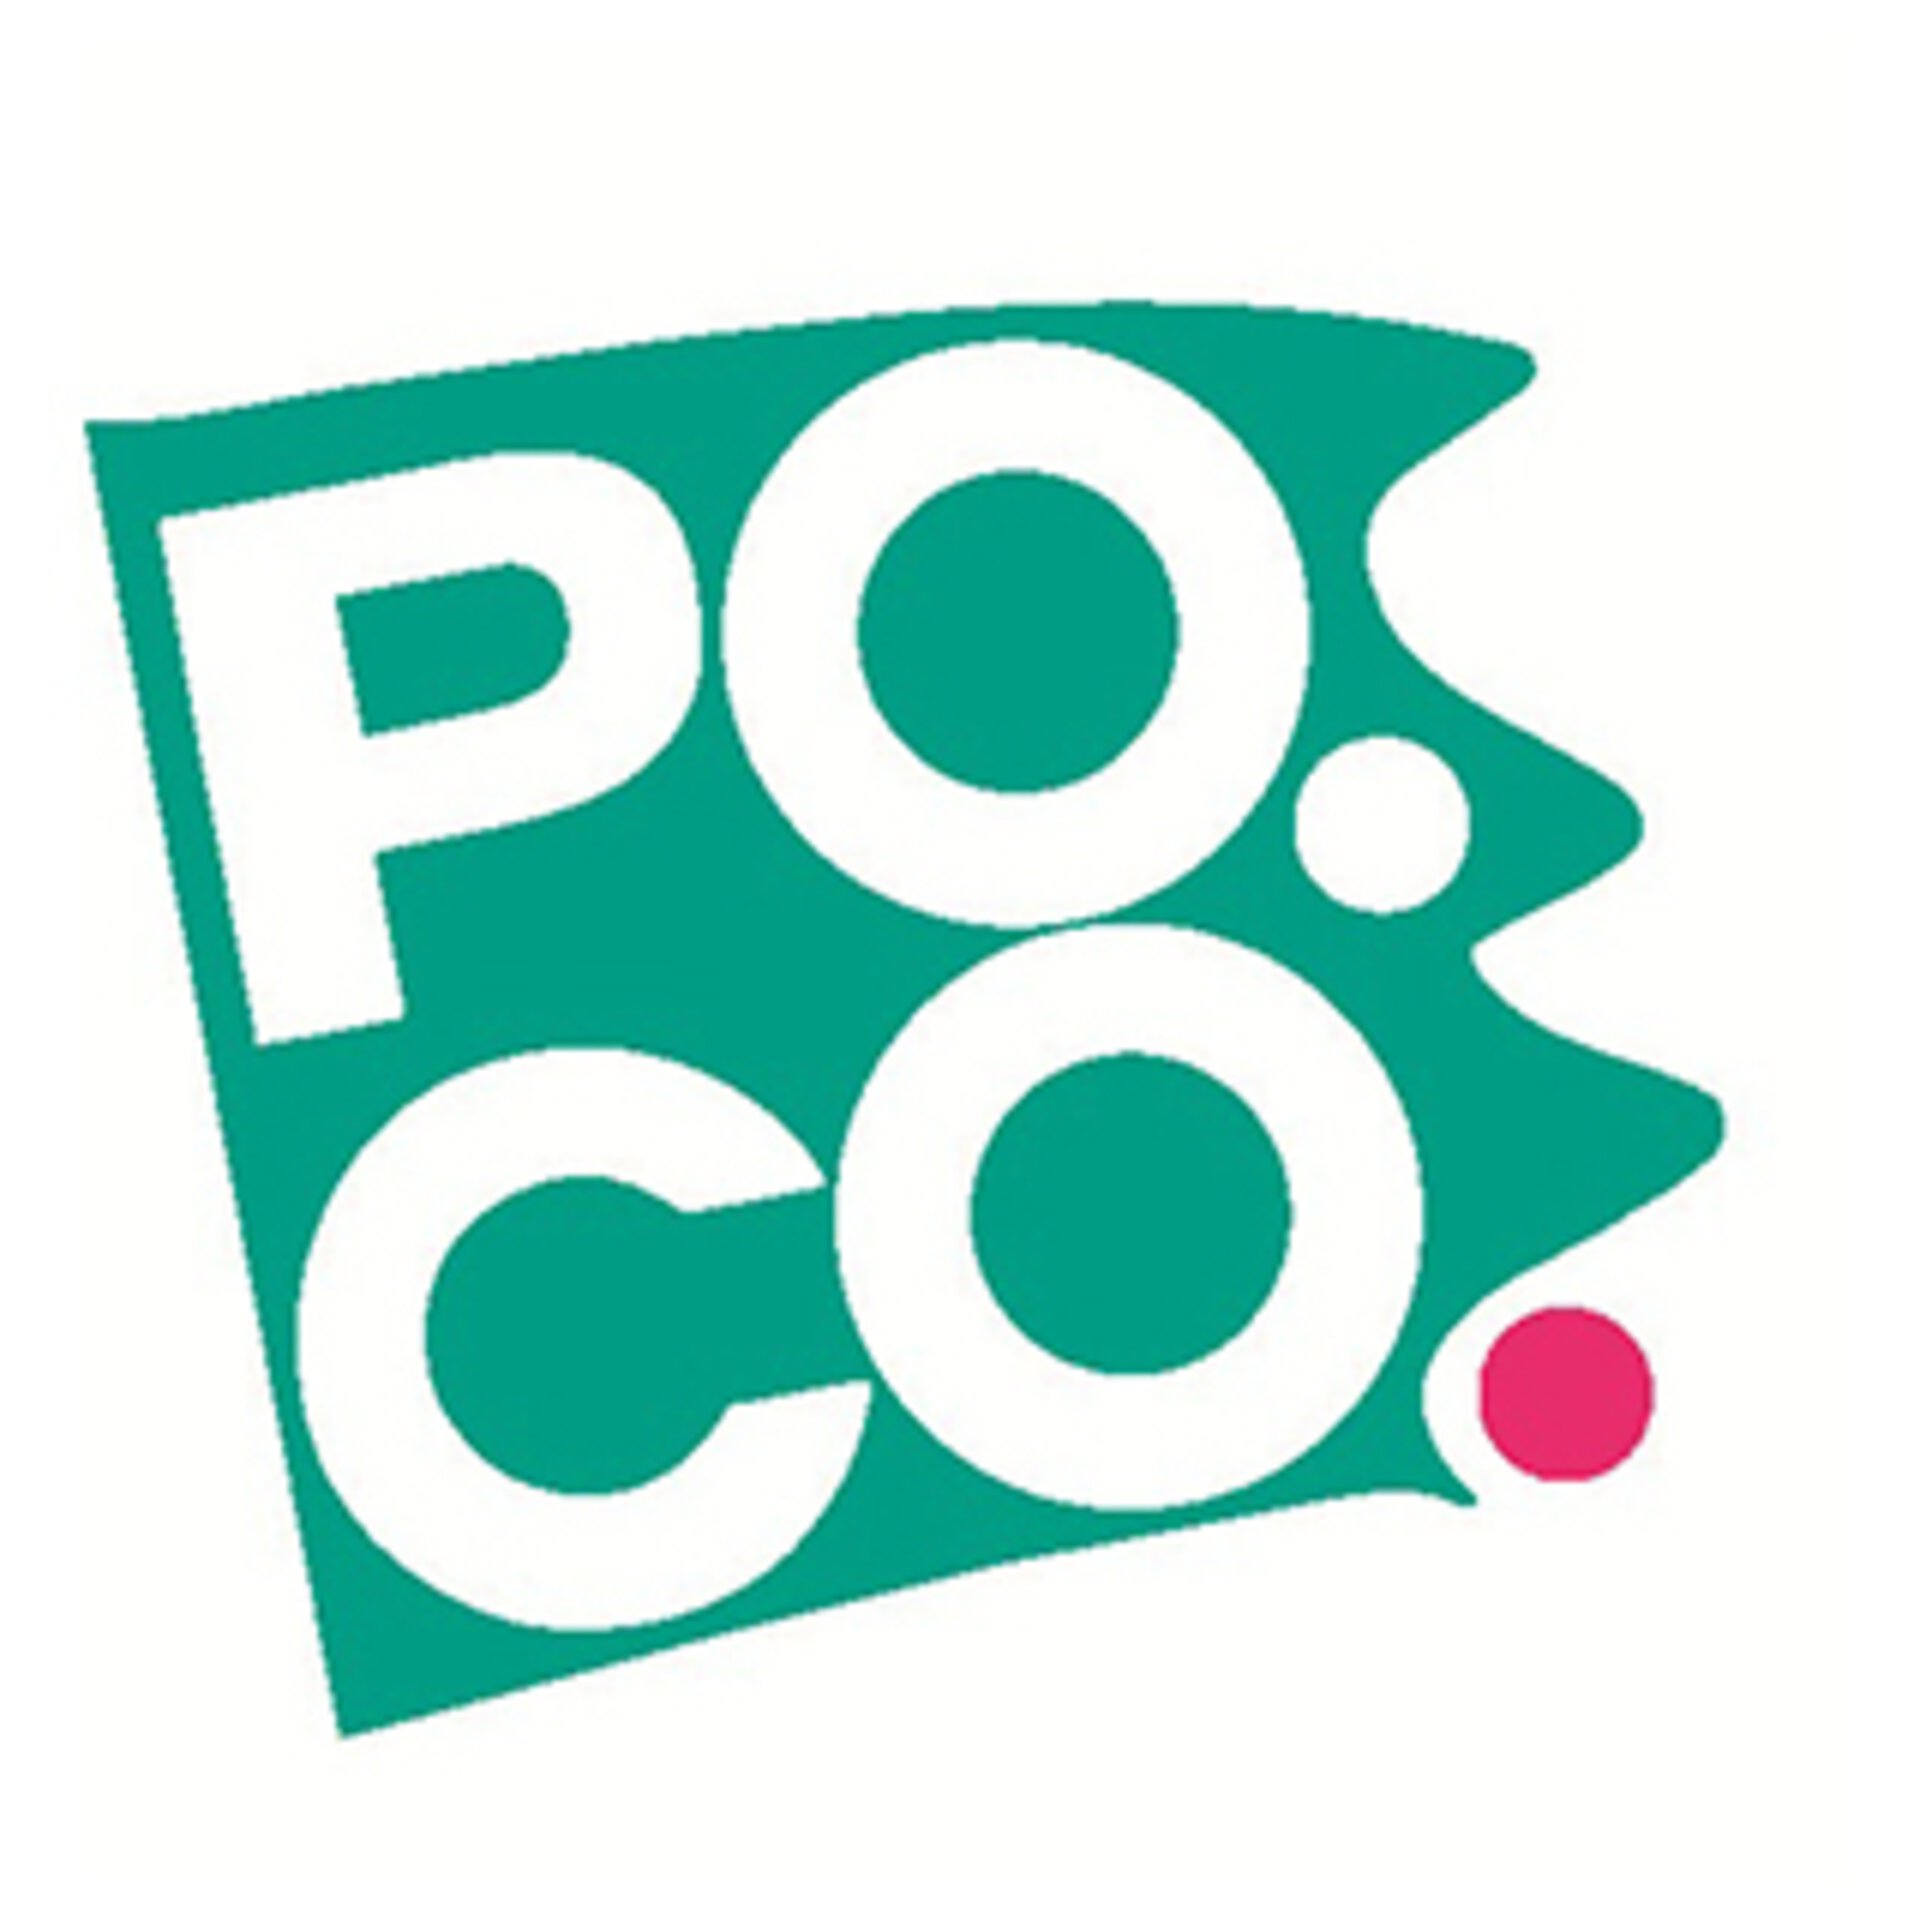 PO.CO. Logo